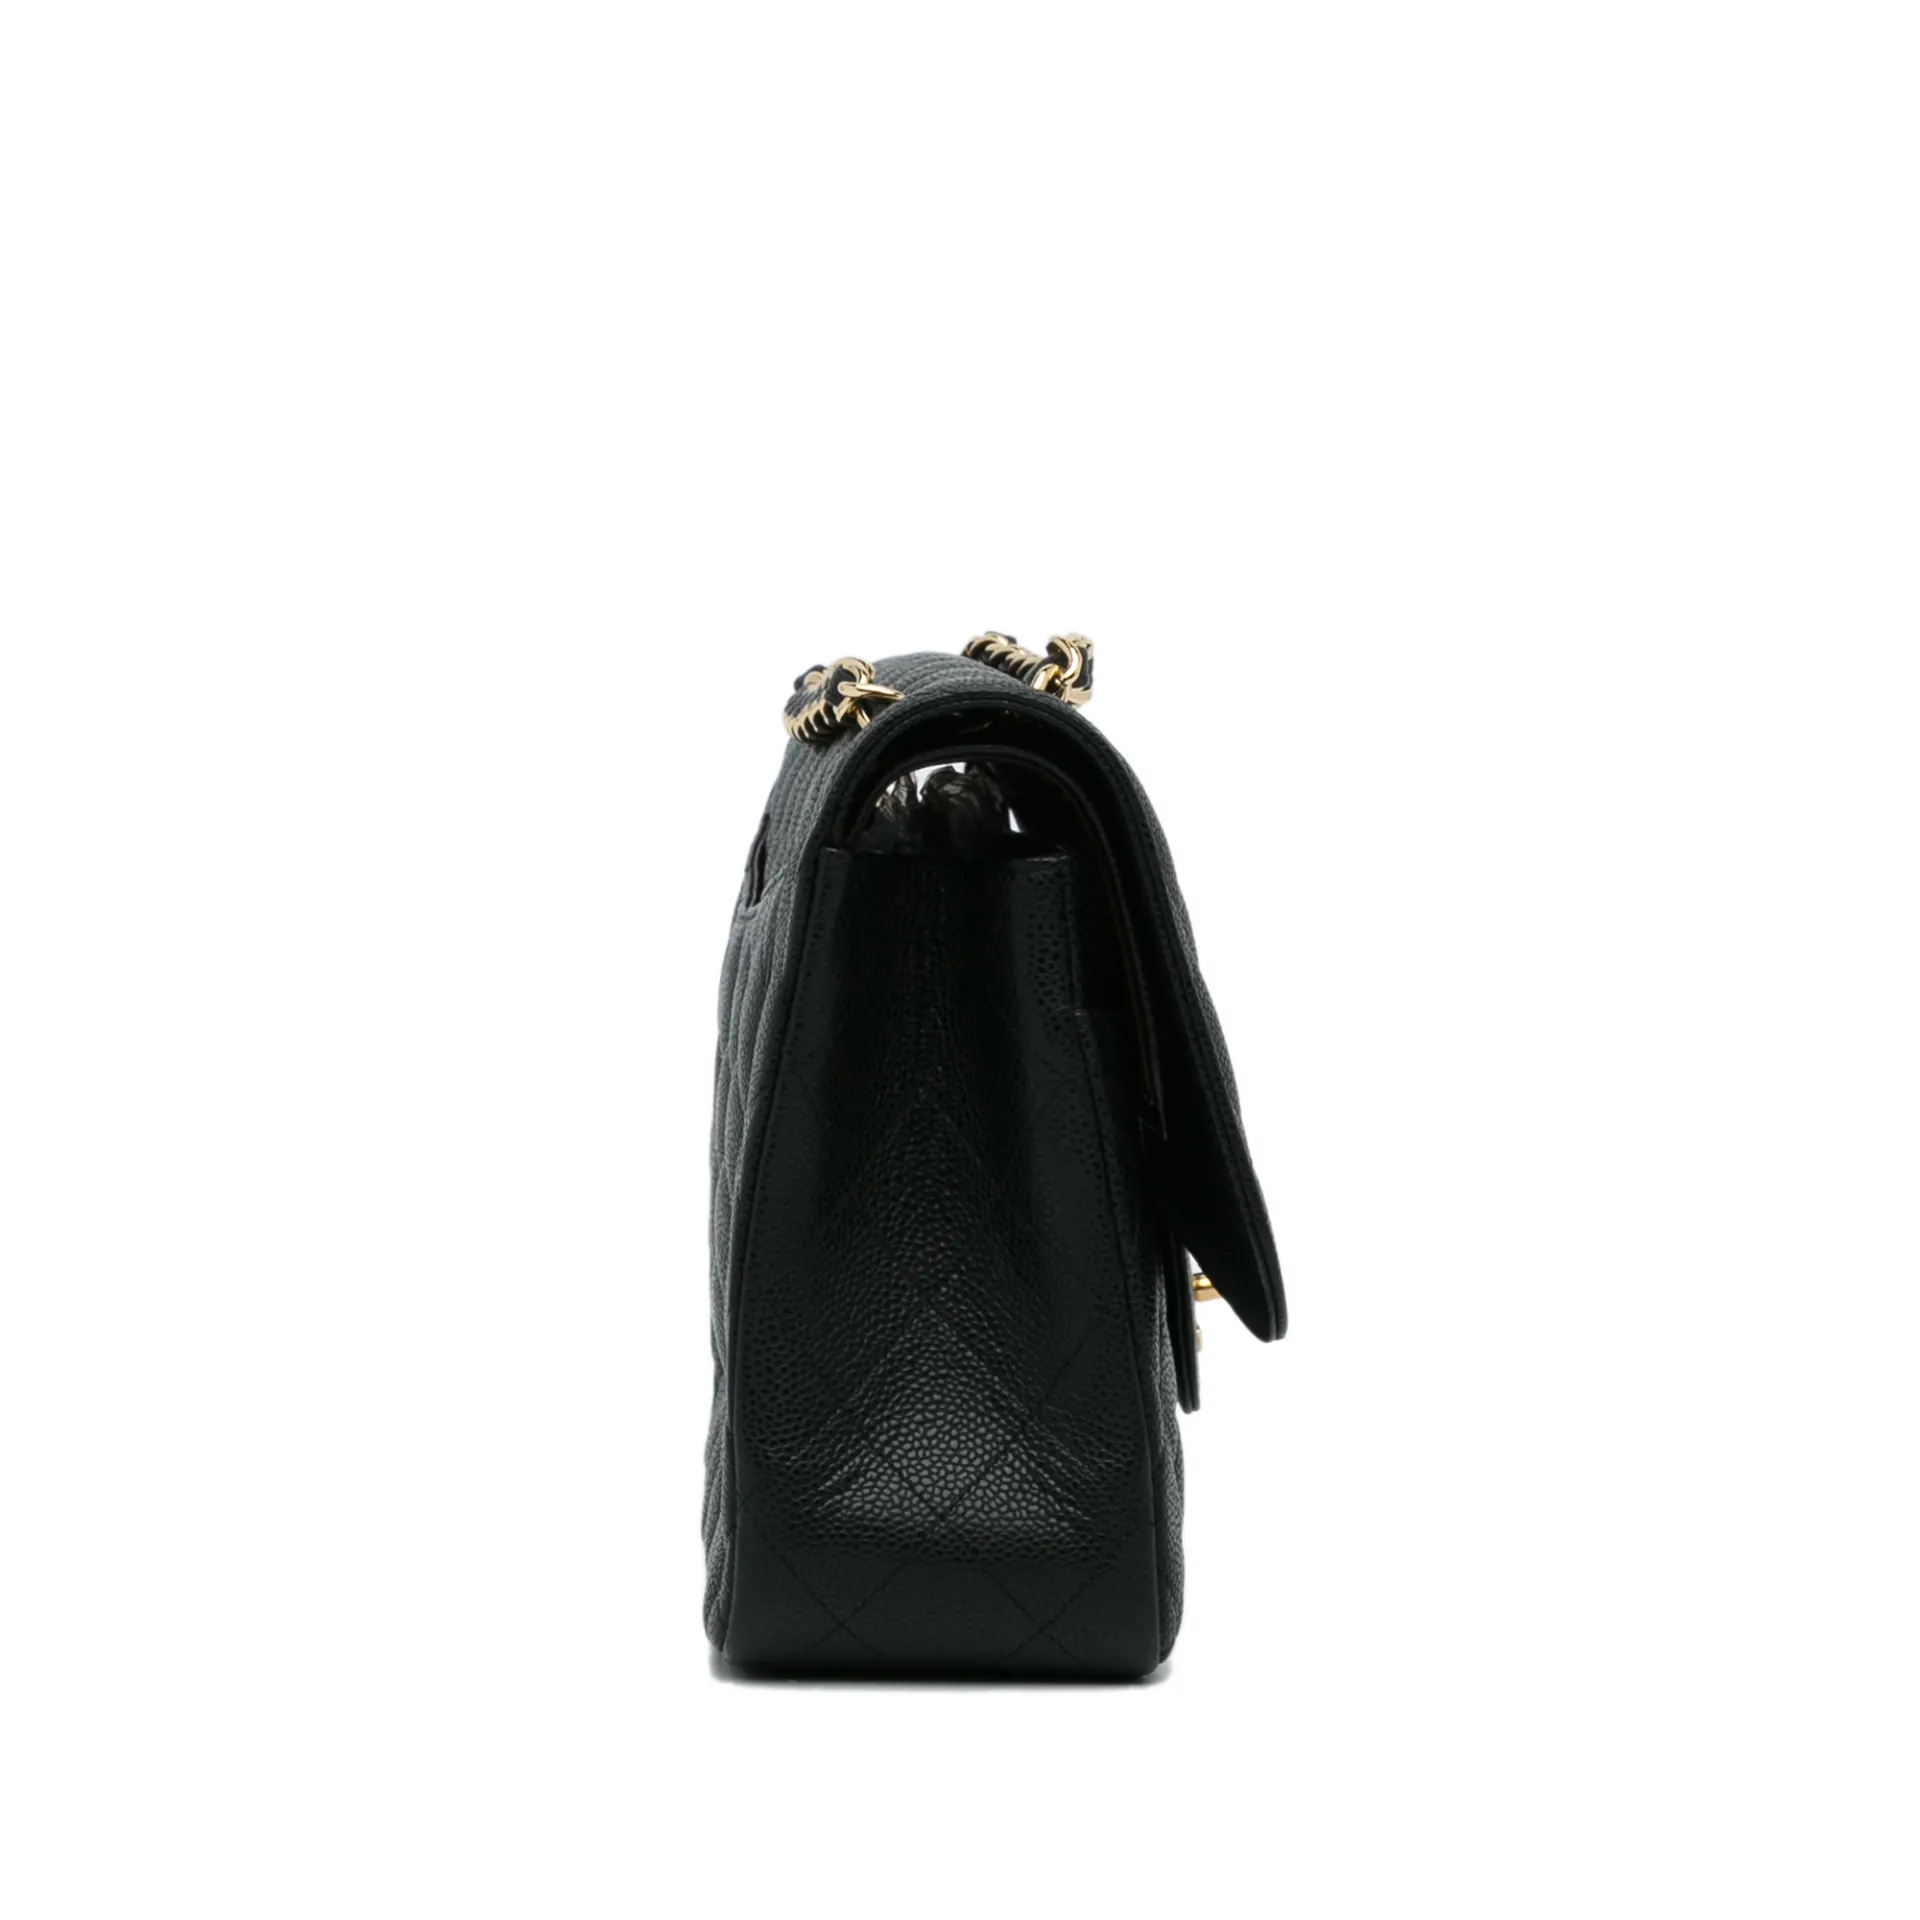 Chanel Jumbo Classic Caviar Single Flap Bag